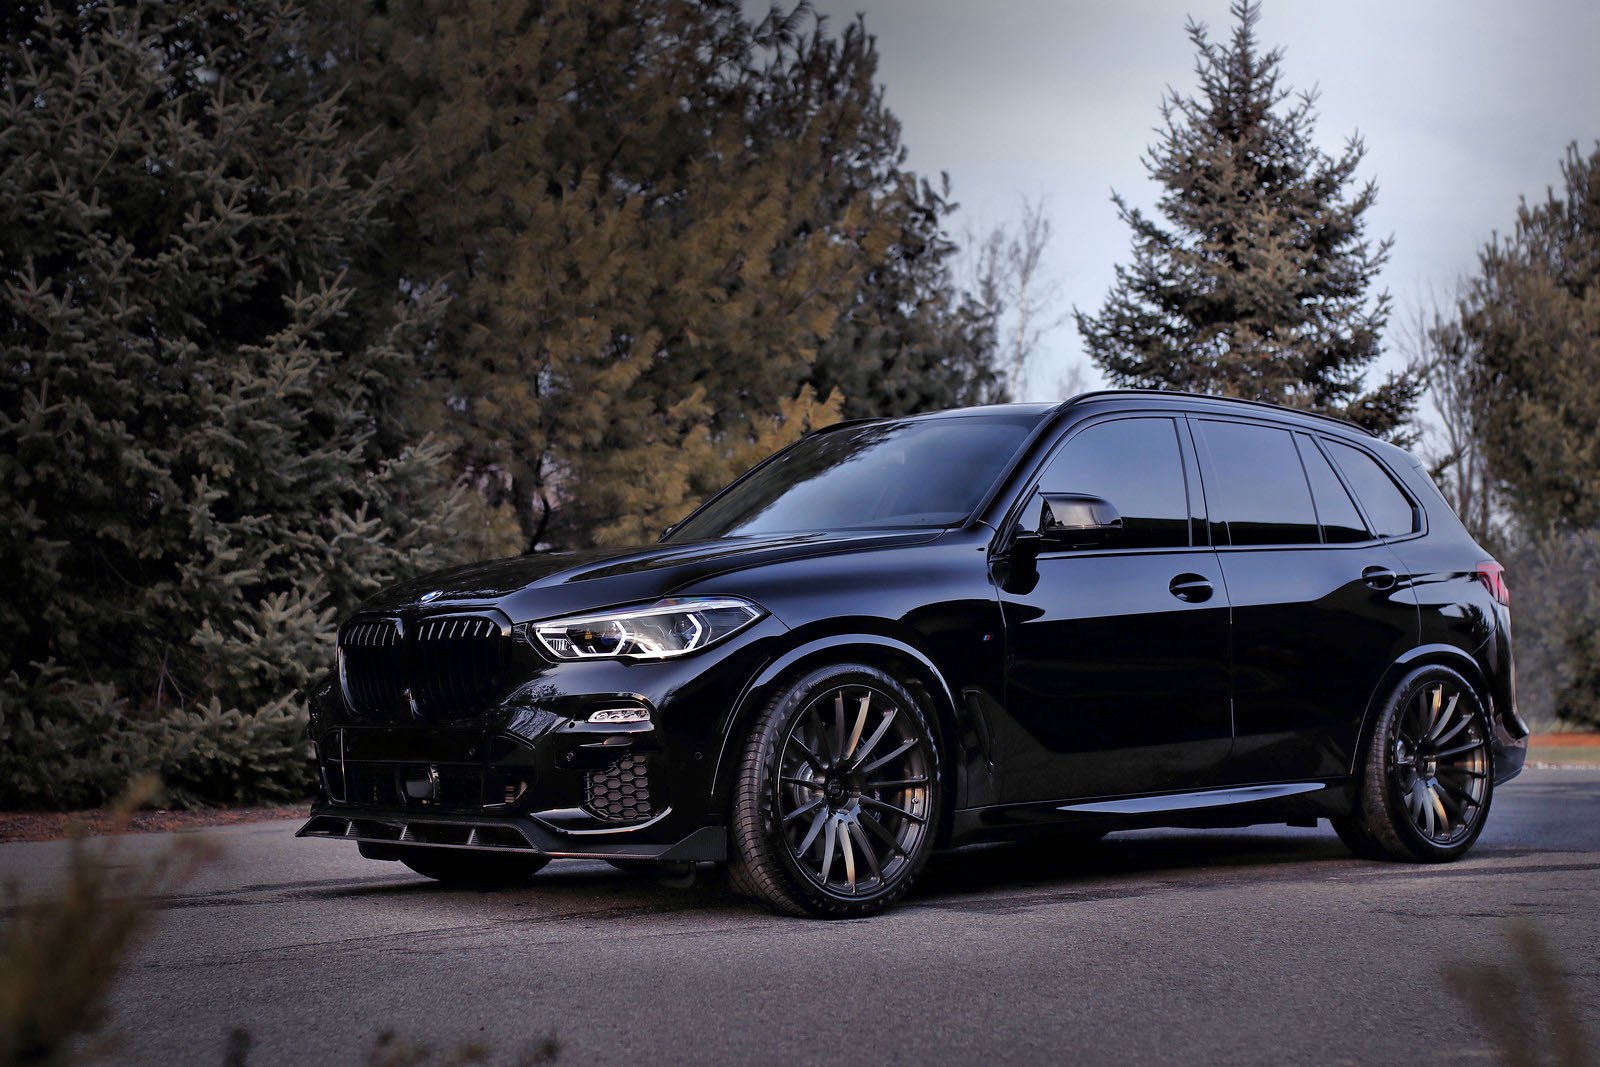 Bmw x5 черный. BMW x5m 2021 Black. BMW x5 g05 Black. BMW x5m 2020 черный. BMW x5 g05 m Sport черный.